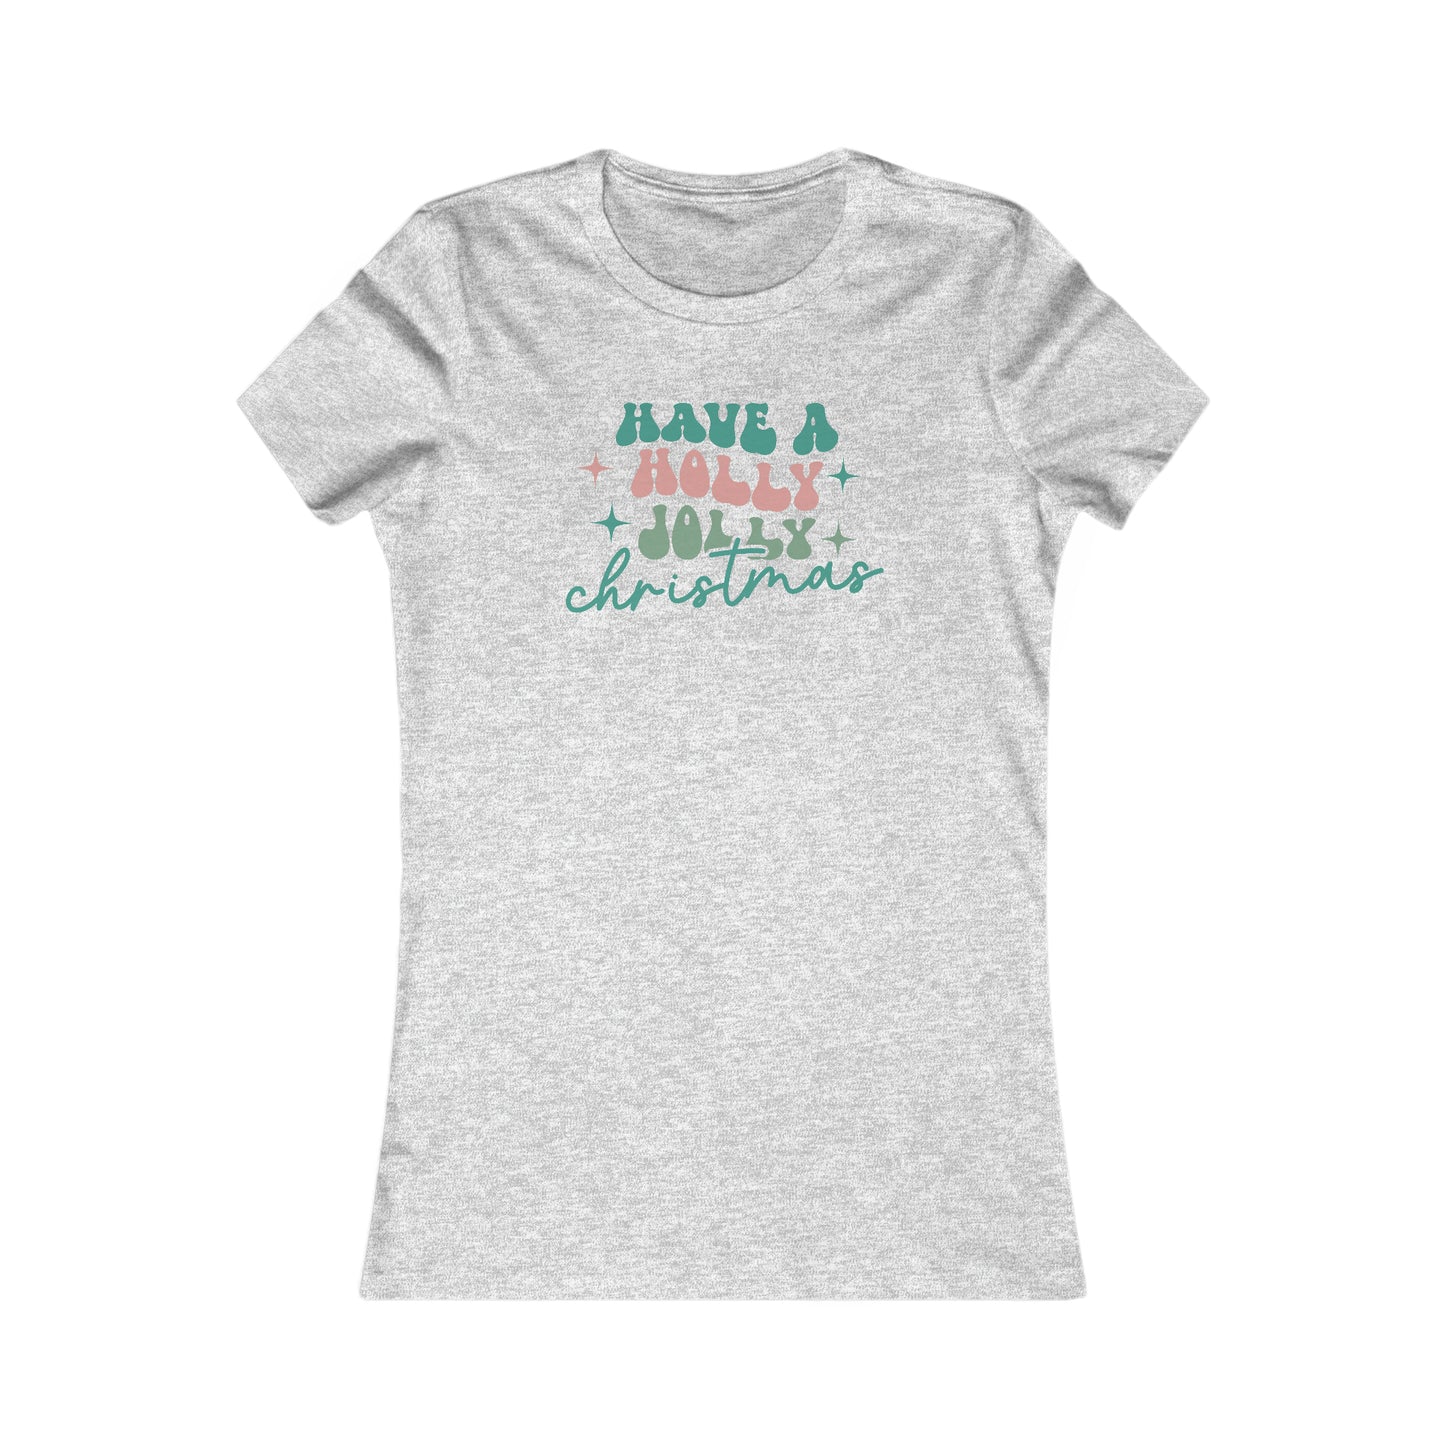 Retro Christmas Tee For Holly Jolly Christmas T-Shirt For Cute Ladies TShirt For Festive Holiday T Shirt